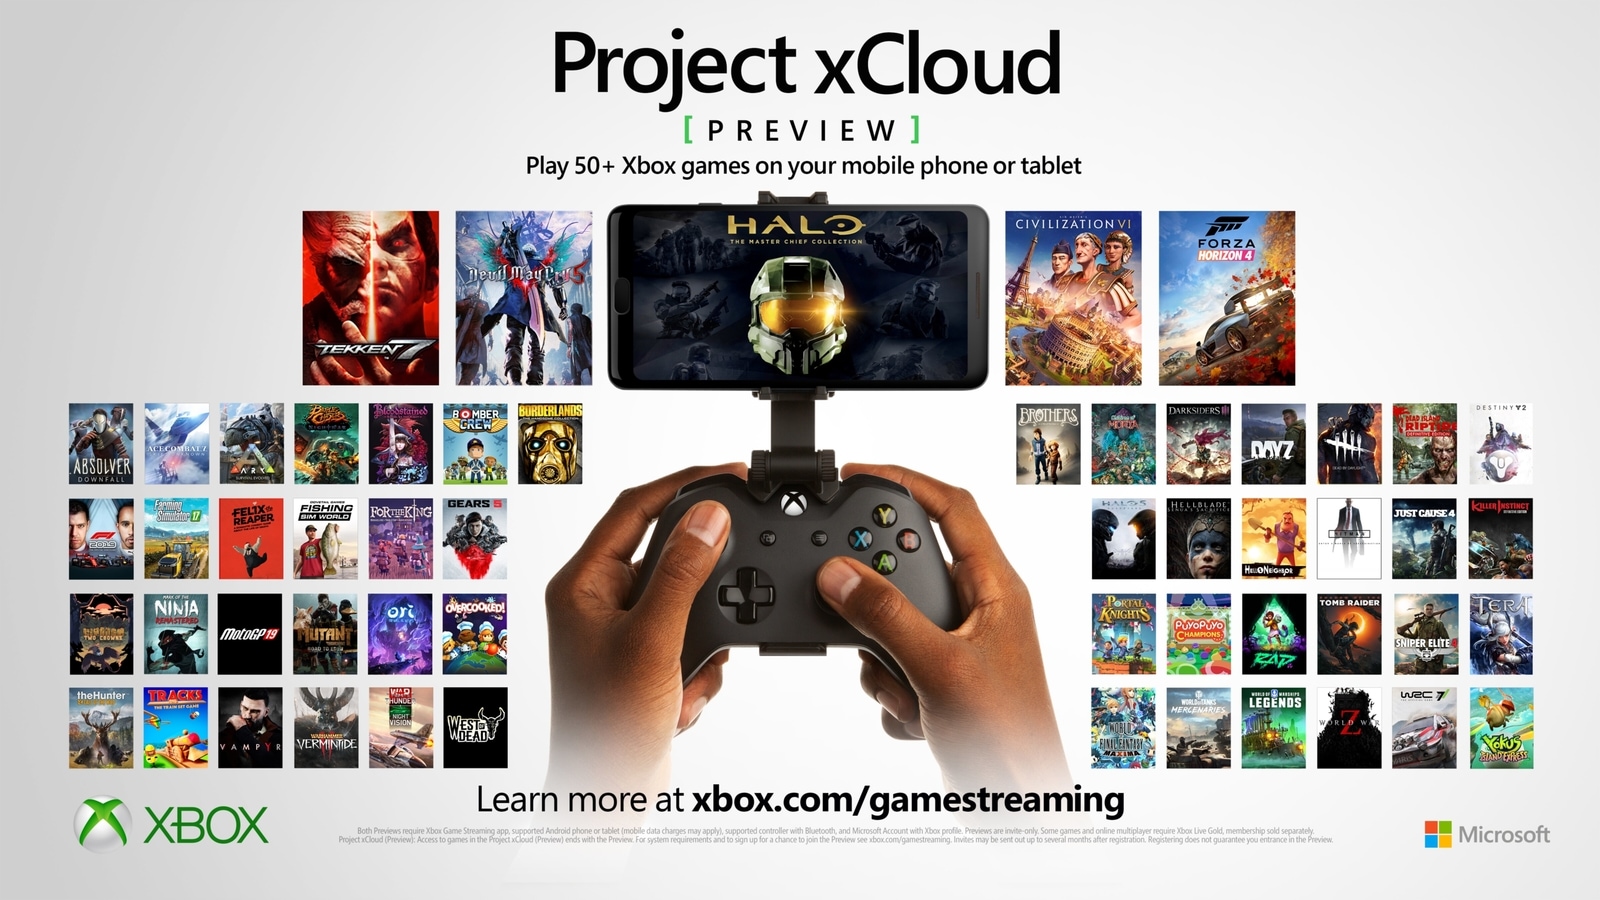 Play Xbox GamePass games on your LG TV via XCloud. 